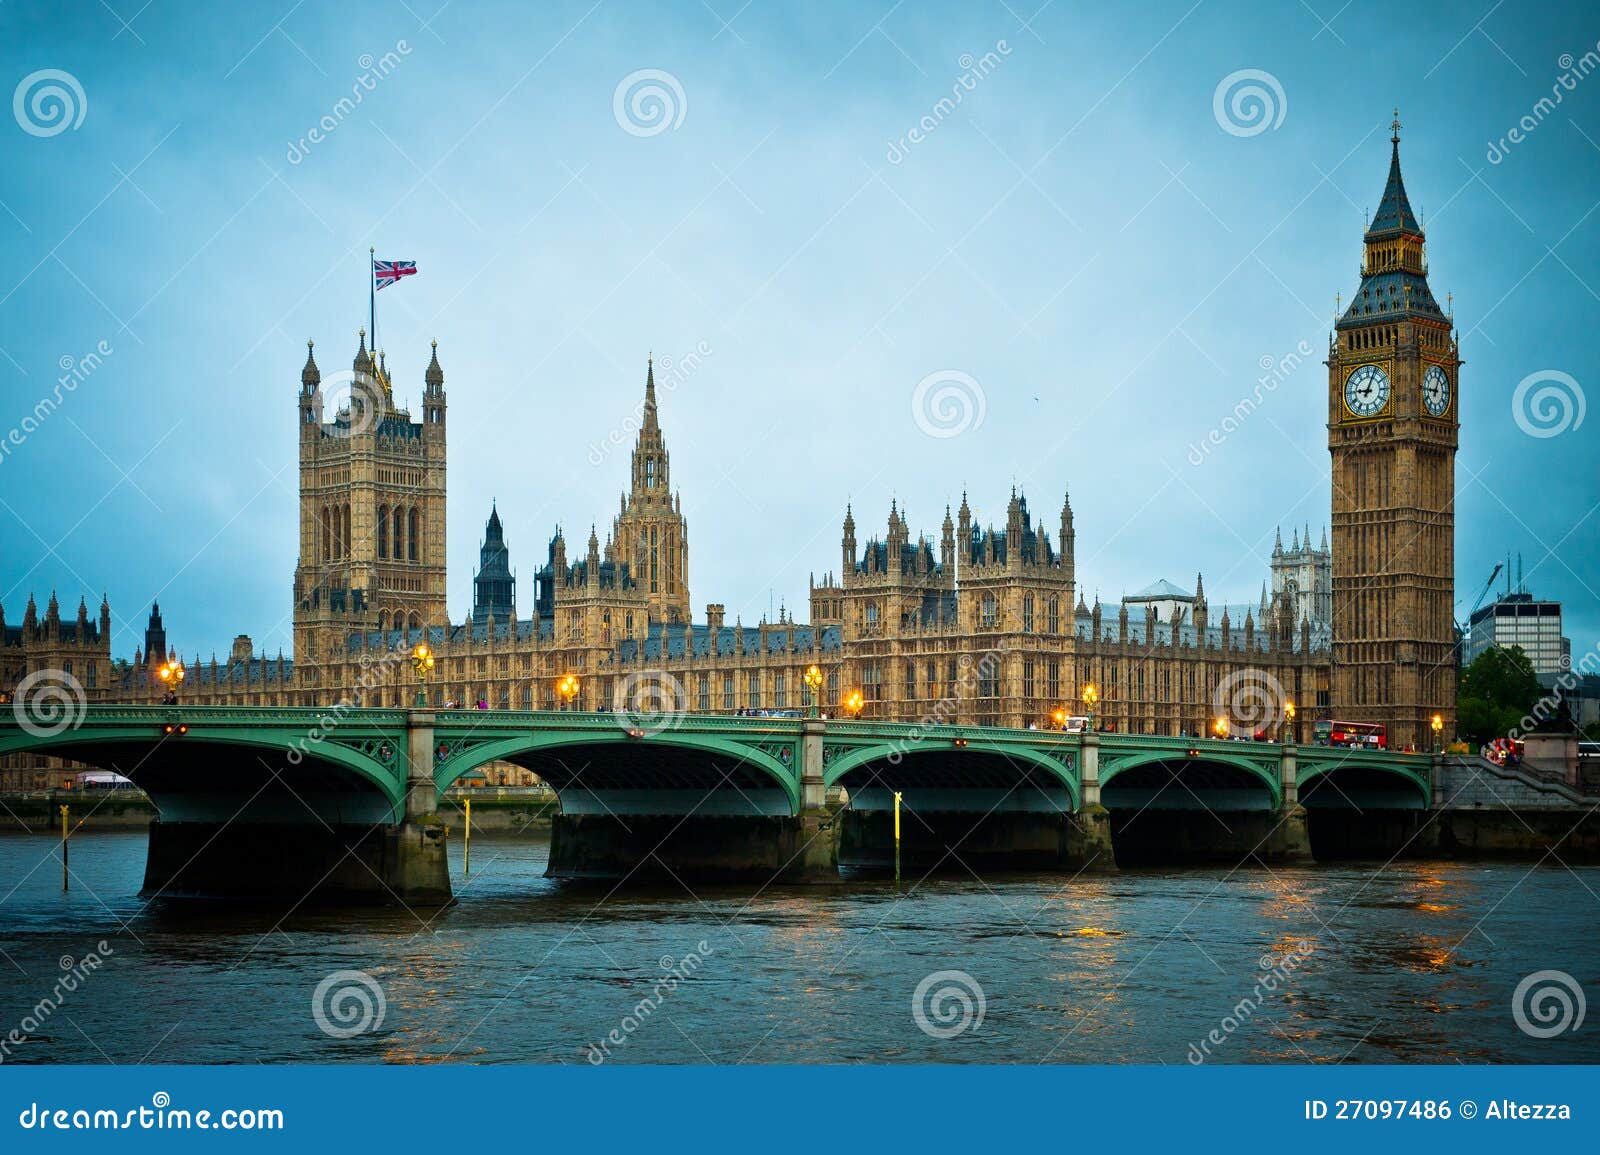 london parliament and big ben